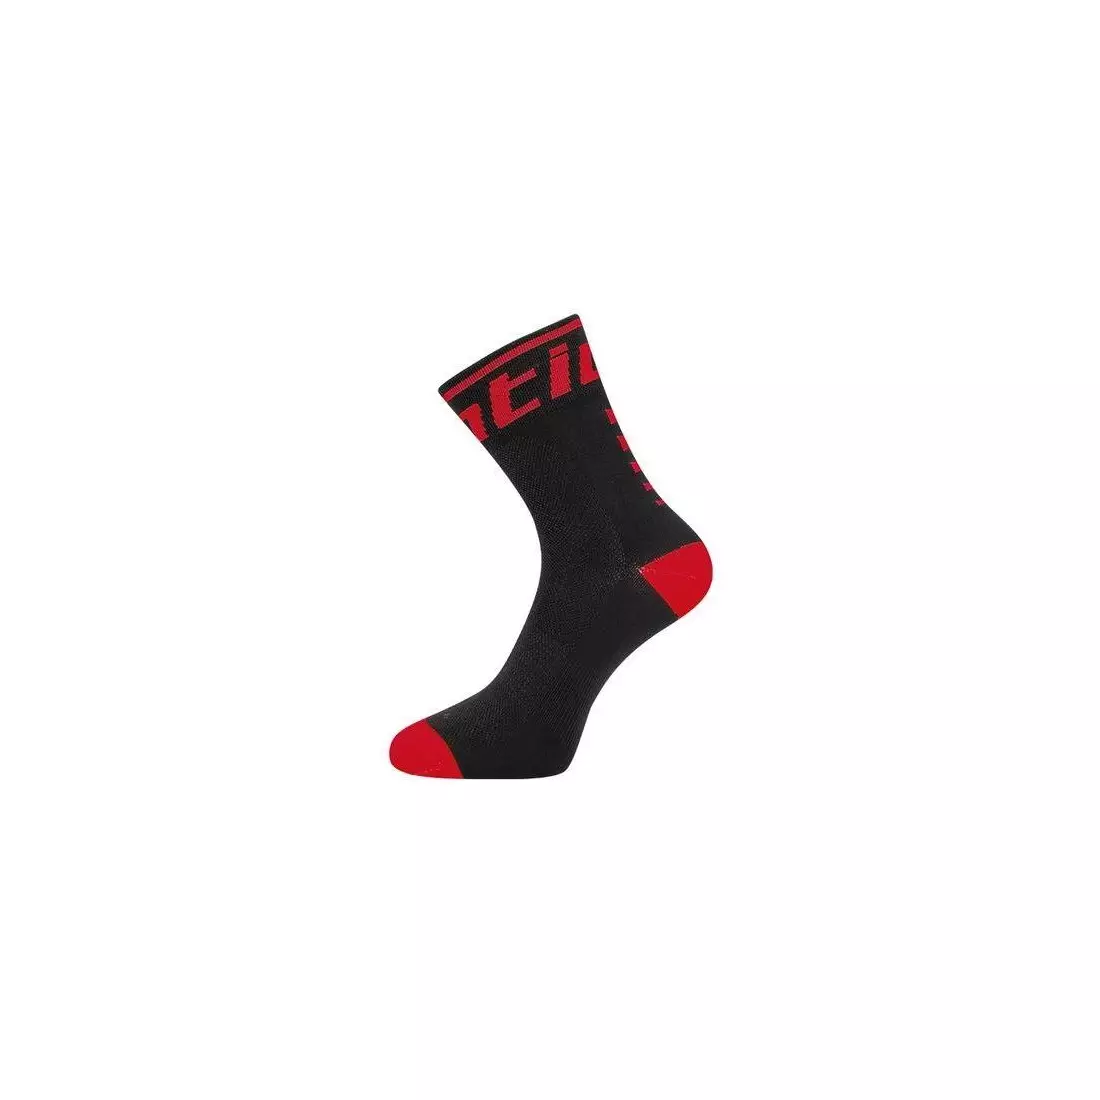 Cyklistické ponožky SANTIC černo-červené 6C09054H